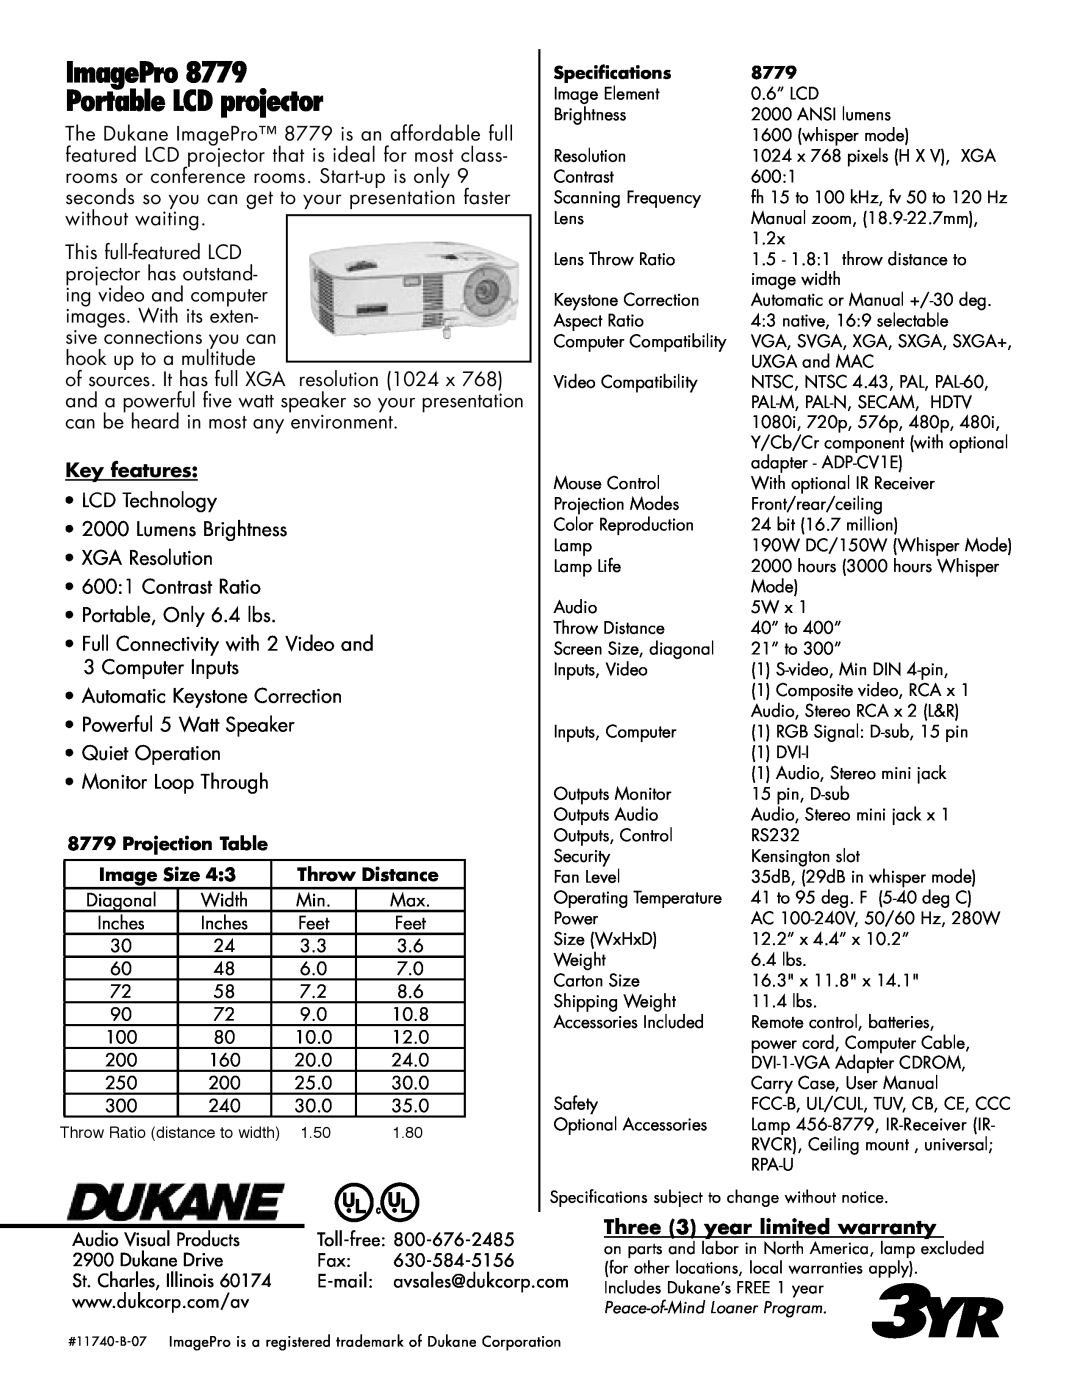 Dukane 8779 manual ImagePro Portable LCD projector, Key features, LCD Technology 2000 Lumens Brightness XGA Resolution 